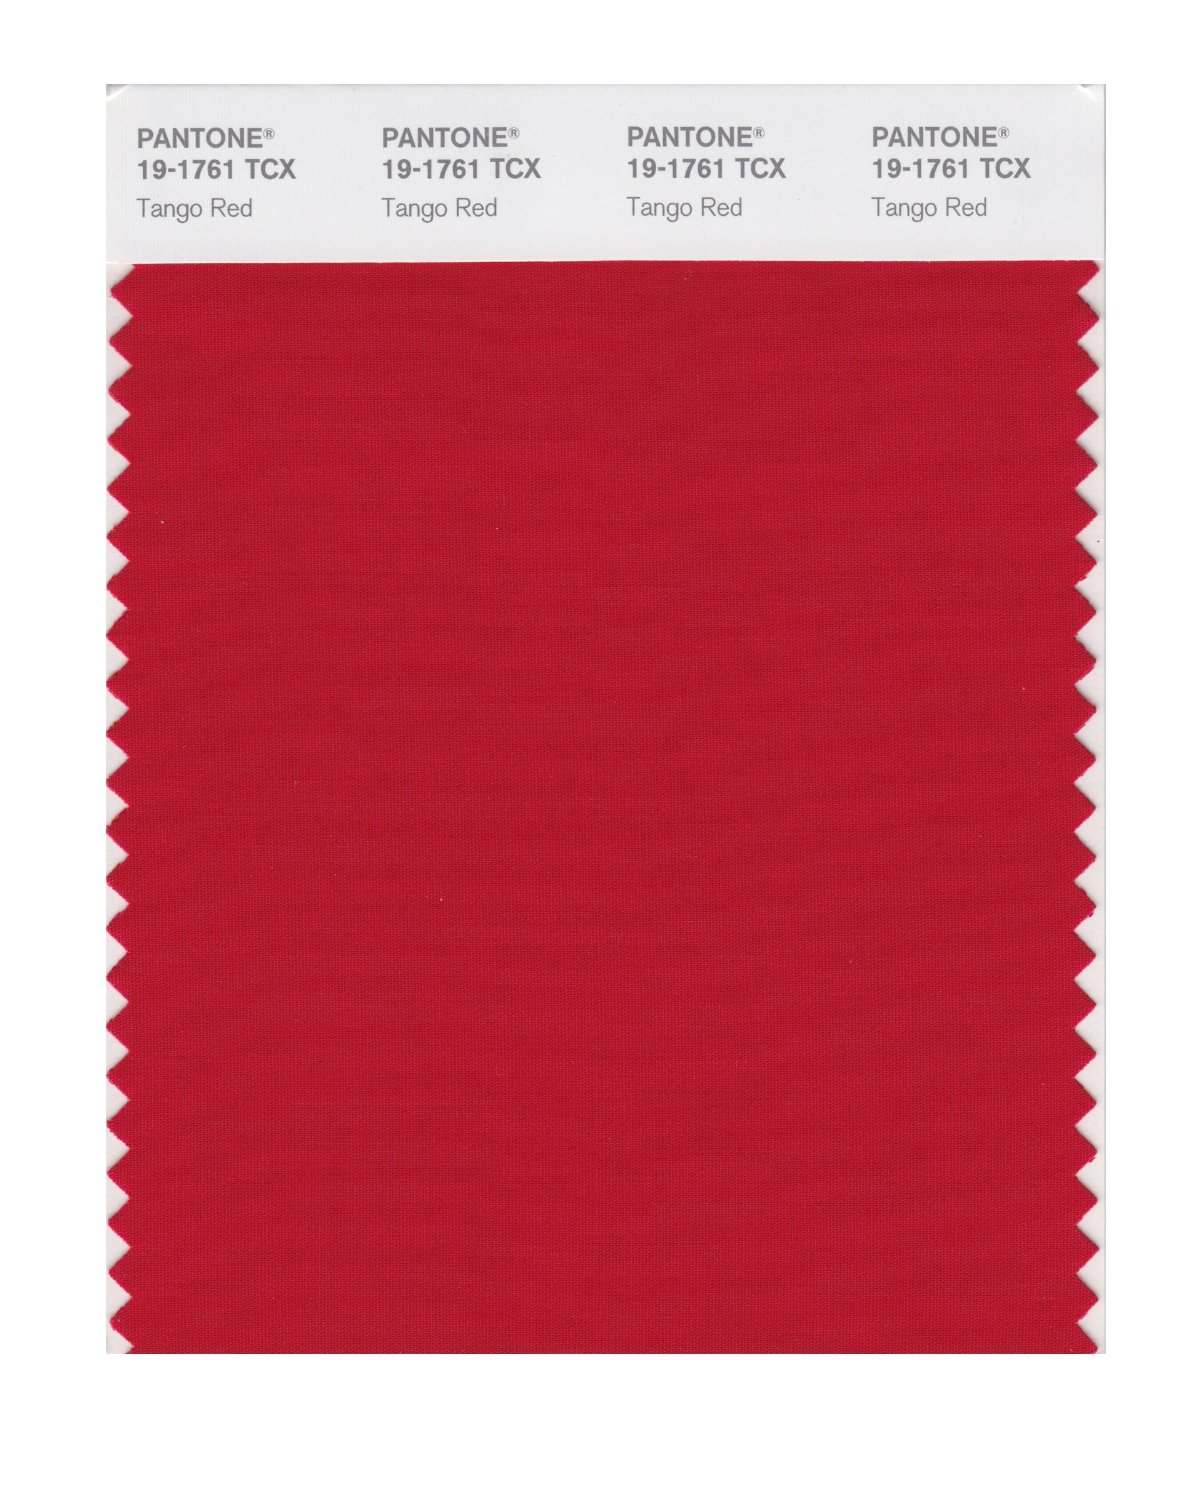 Pantone Cotton Swatch 19-1761 Tango Red